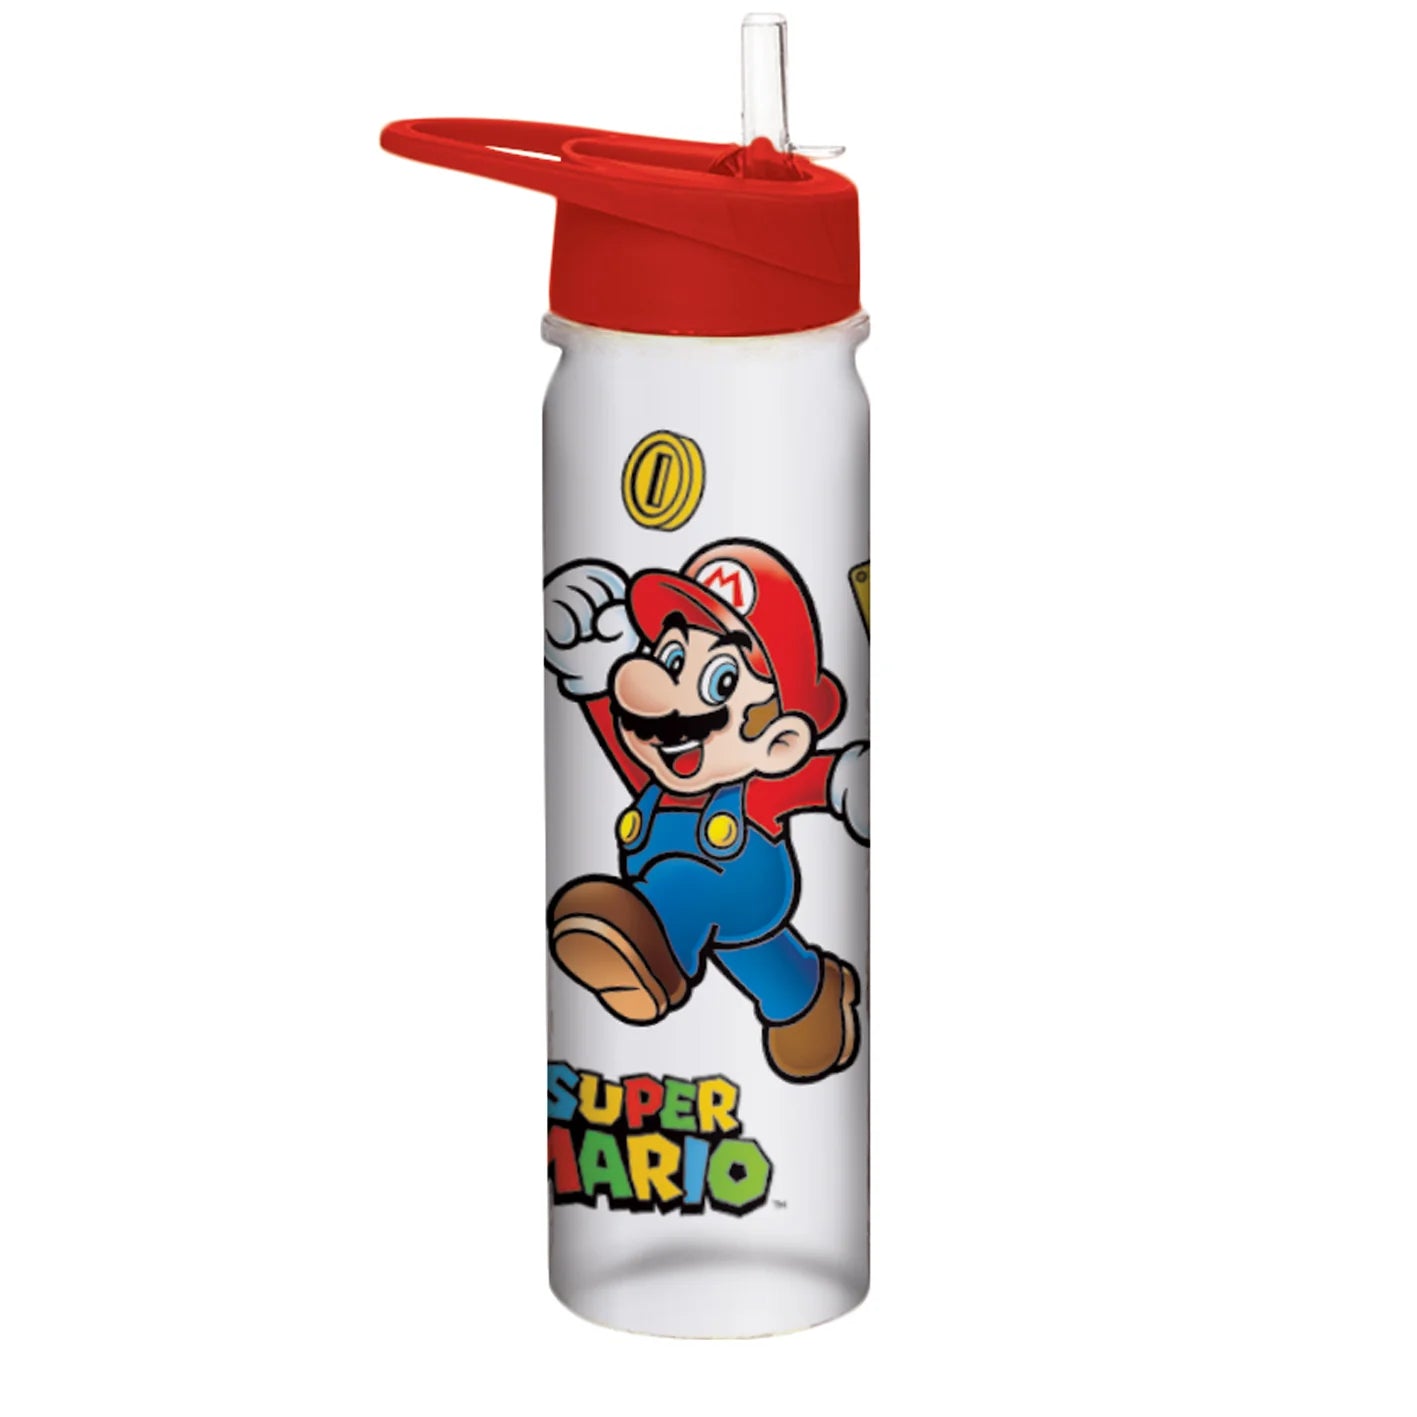 Super Mario (Jump) - Plastic Drinks Bottle (700ml)